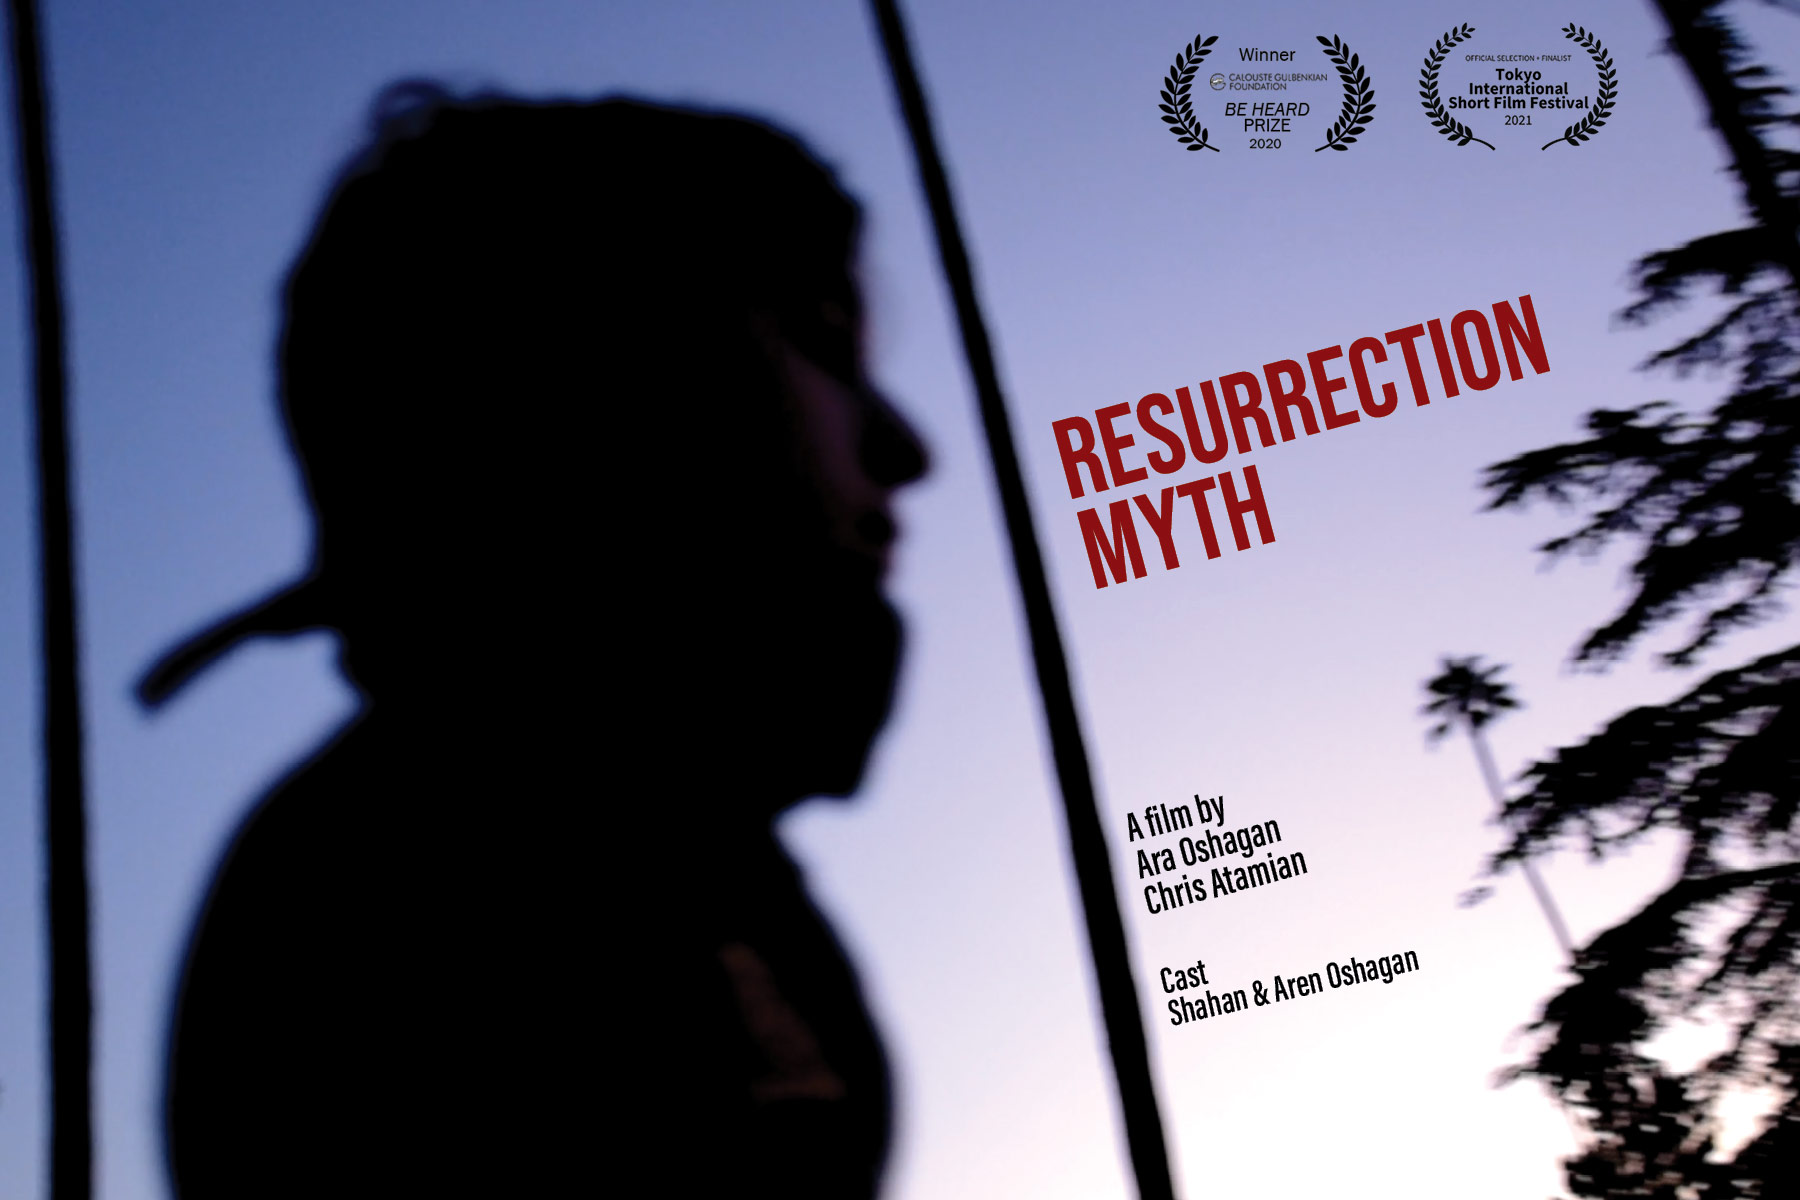 Resurrection Myth Poster